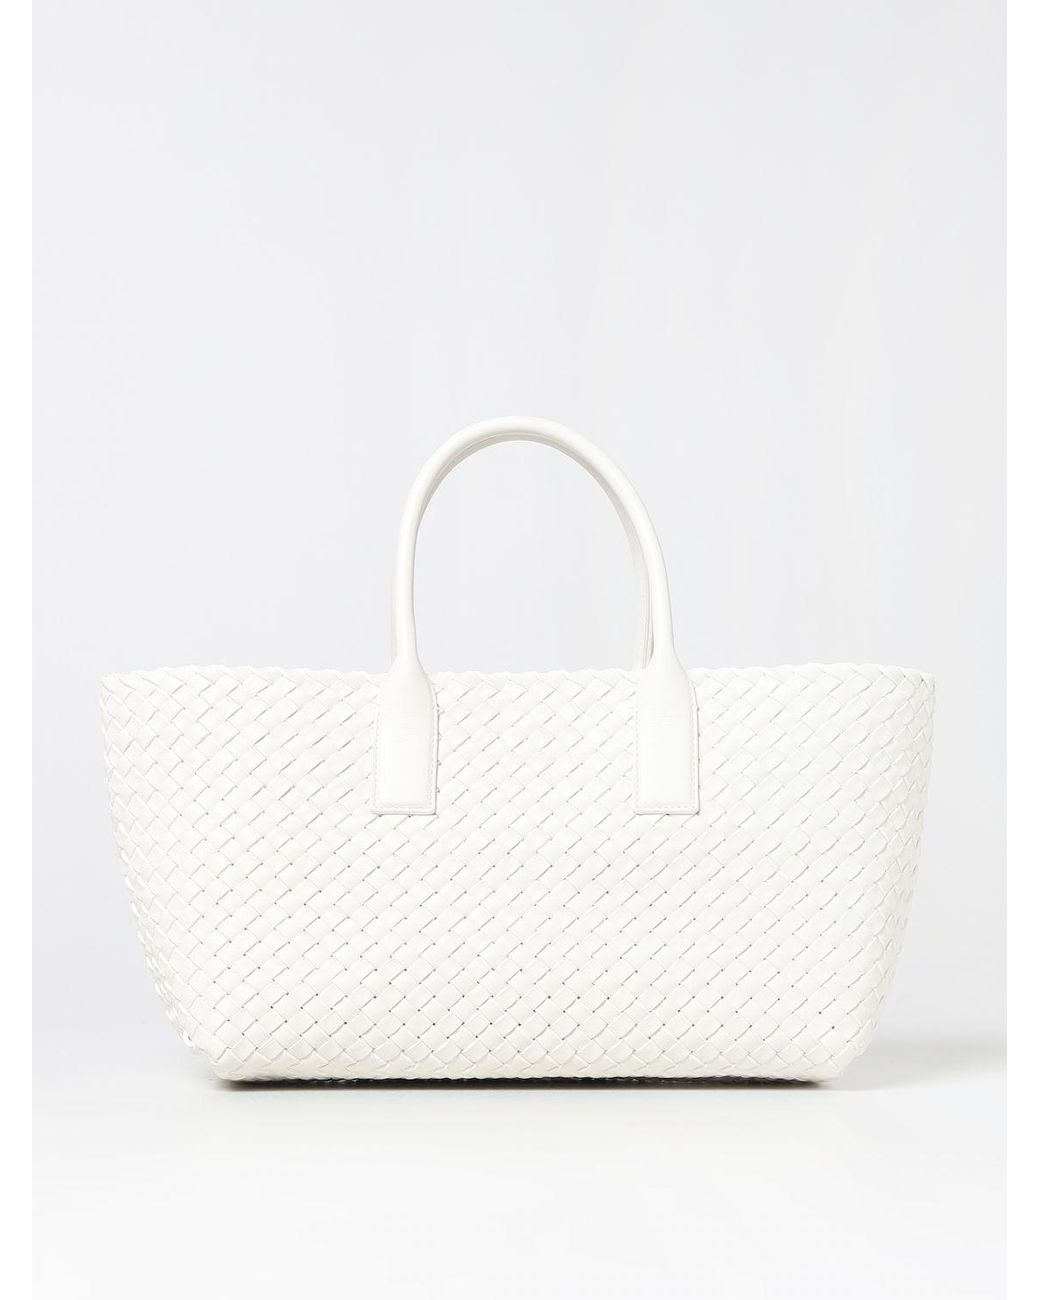 Bottega Veneta Cabat Bag In Woven Leather in White | Lyst